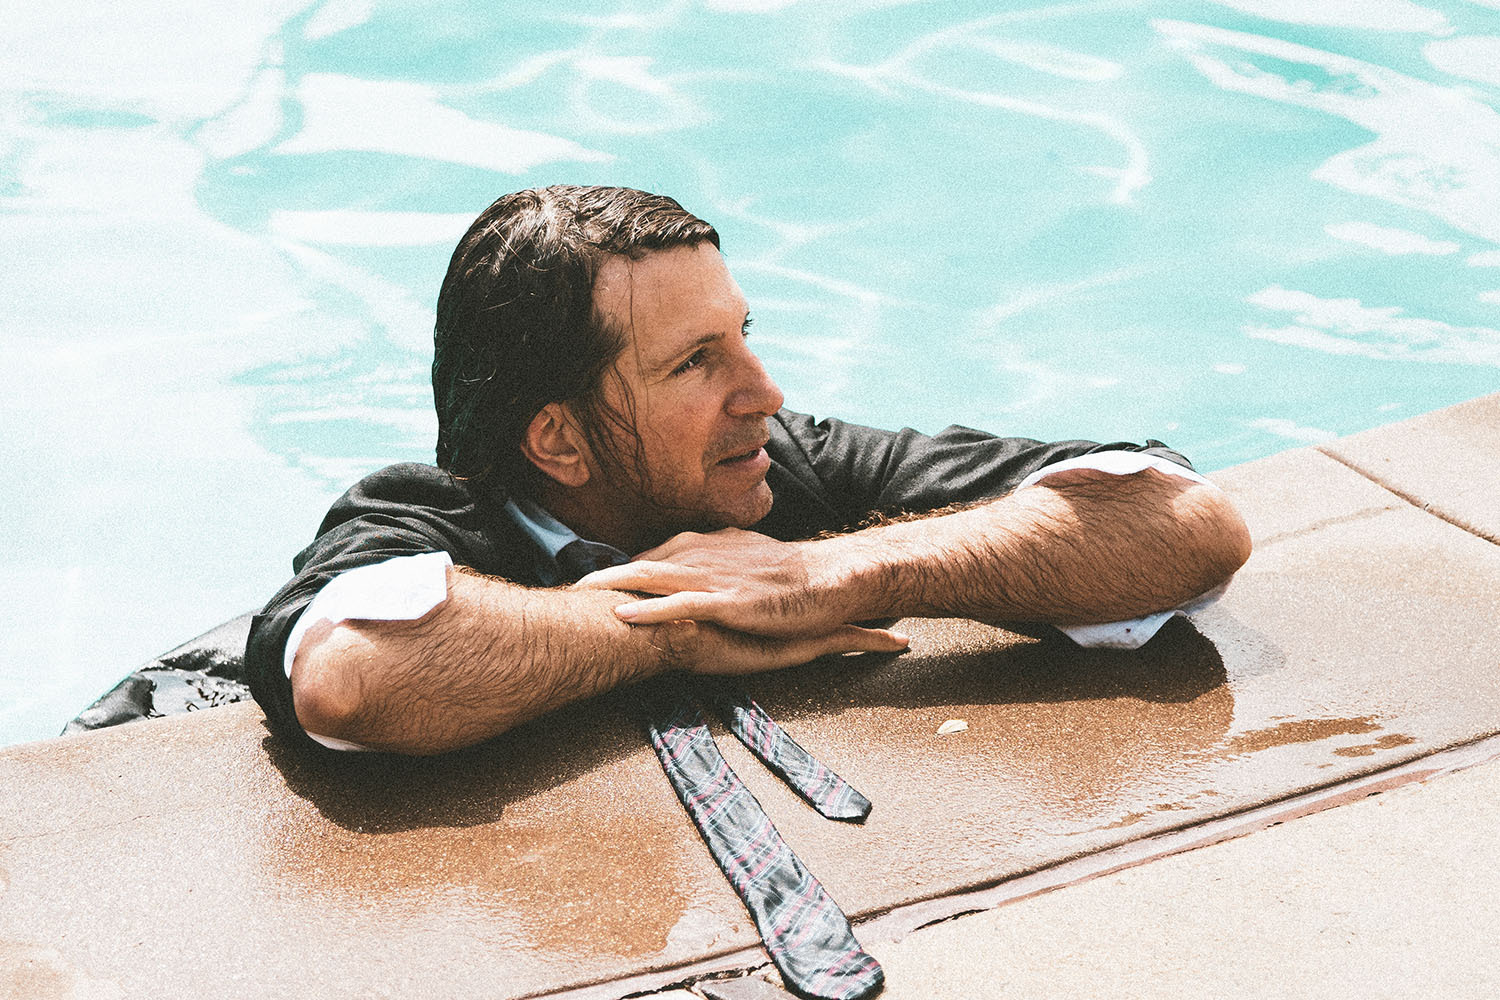 DJ Poolside in a swimming pool